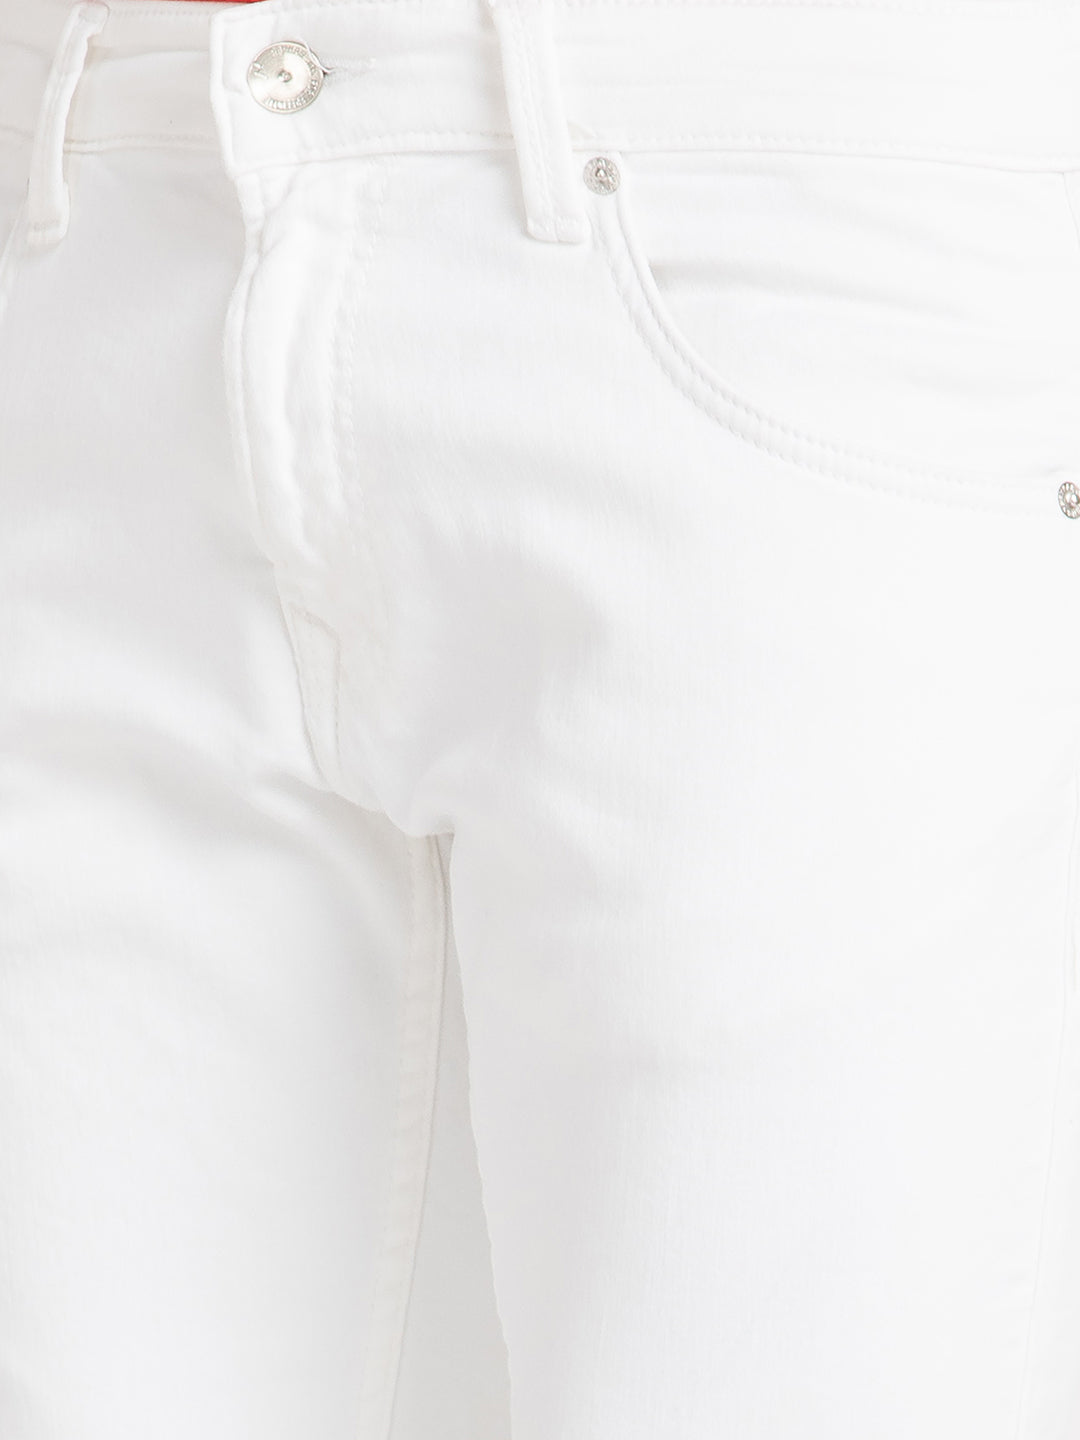 Spykar Men White Cotton Slim Fit Narrow Length Jeans (Skinny)